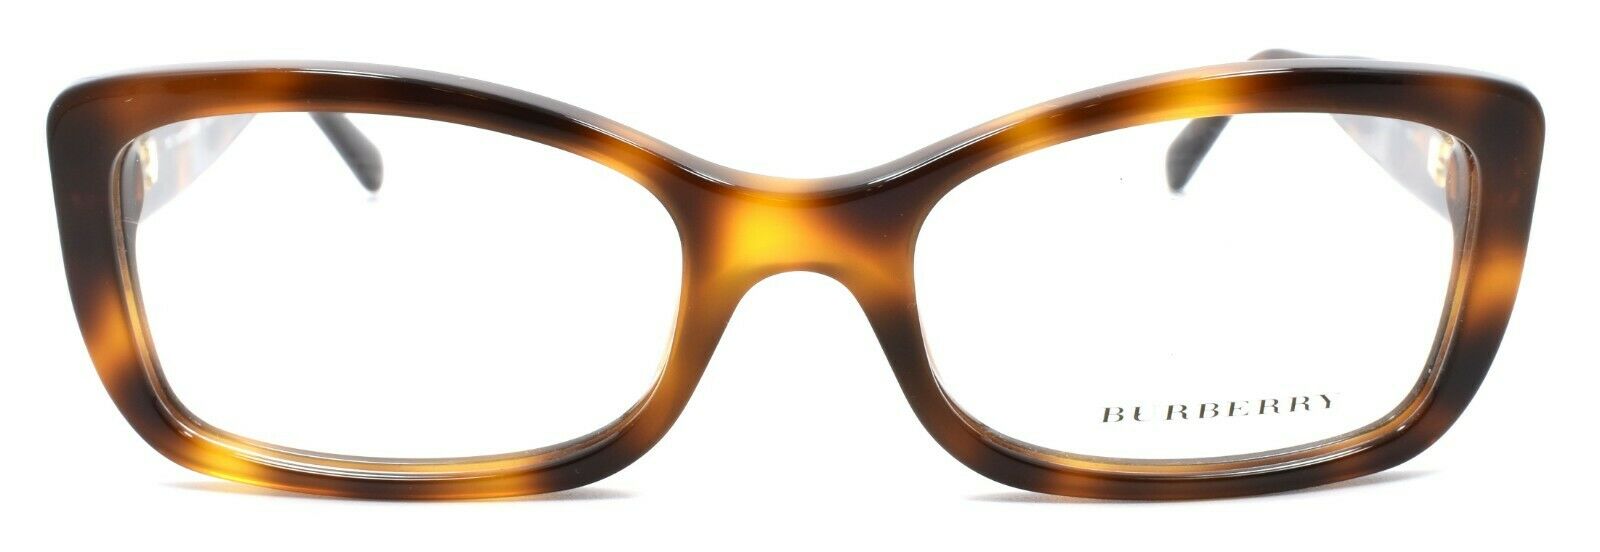 2-Burberry B 2130 3316 Women's Eyeglasses Frames 51-18-135 Brown Tortoise ITALY-713132575635-IKSpecs